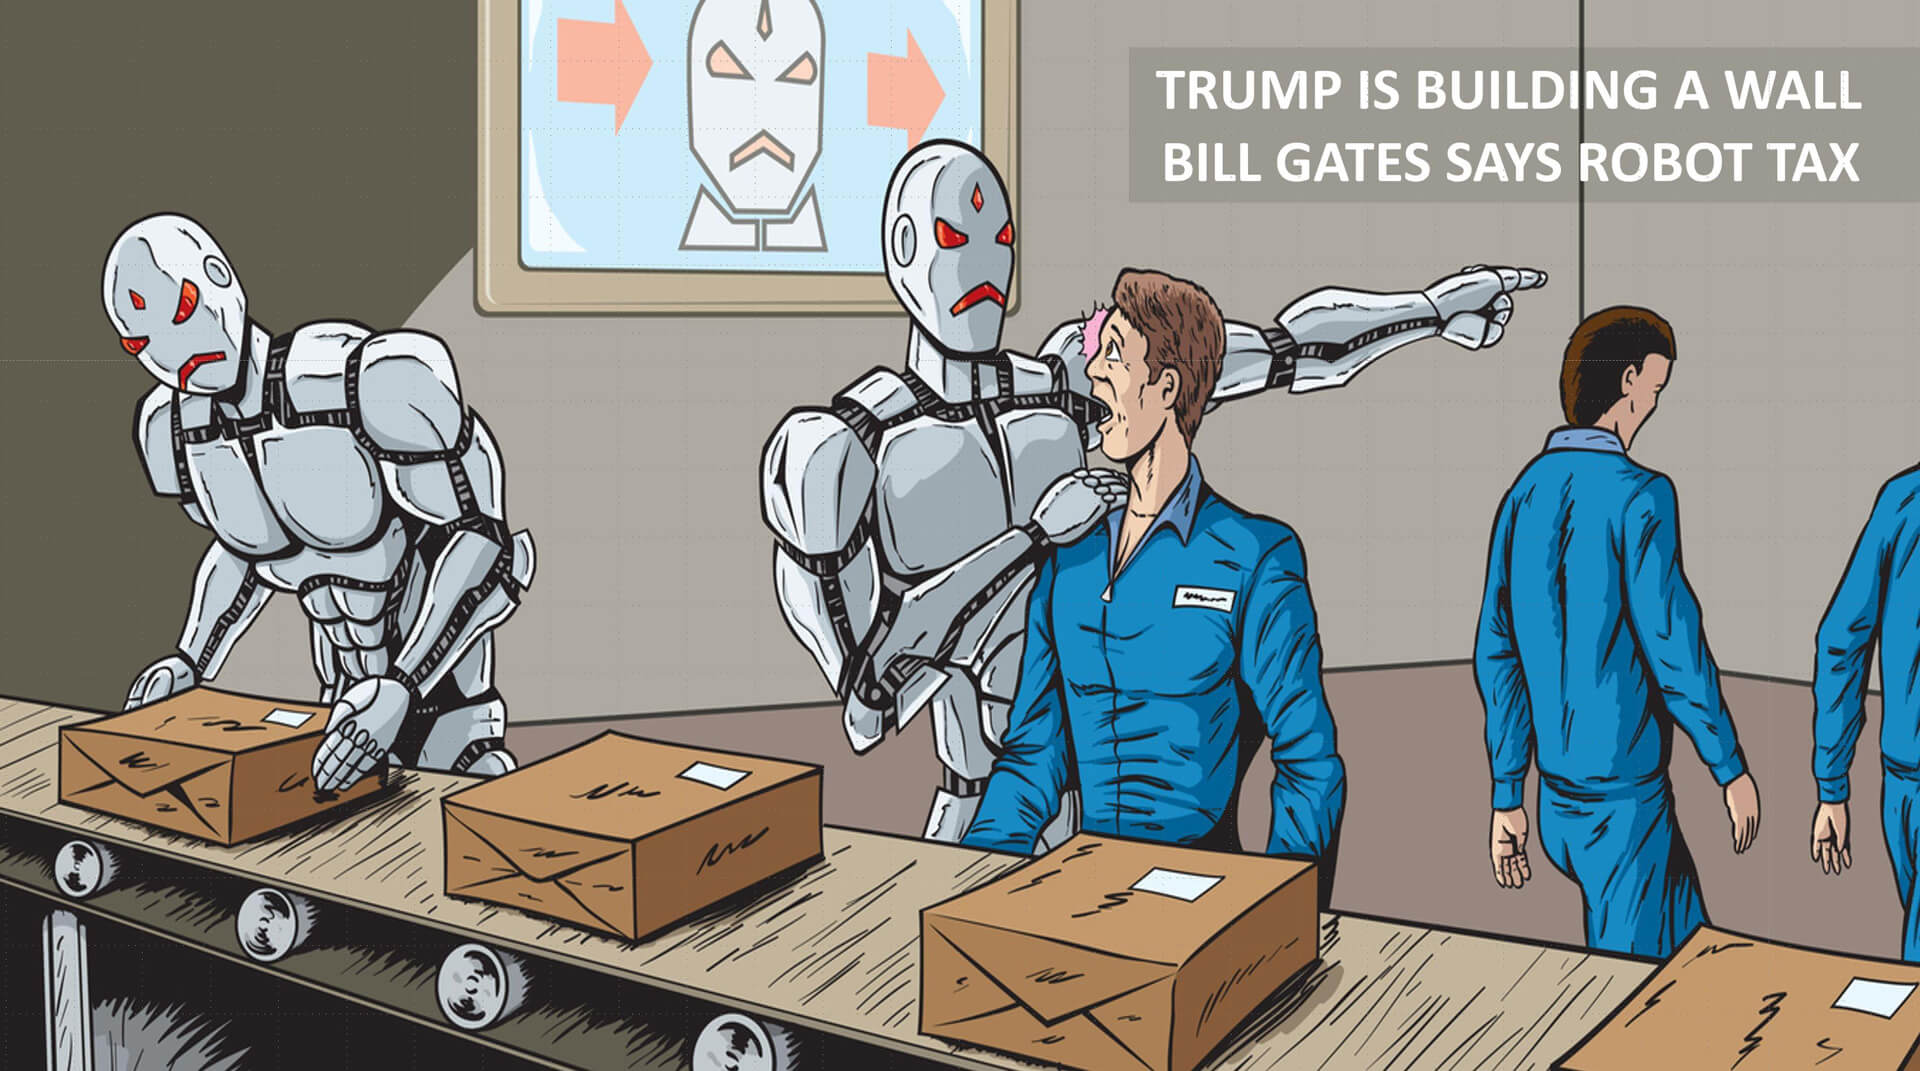 Donald Trumps wants to build a wall, Bill Gates says Robot Tax - Marketing Keynote Speaker Igor Beuker 